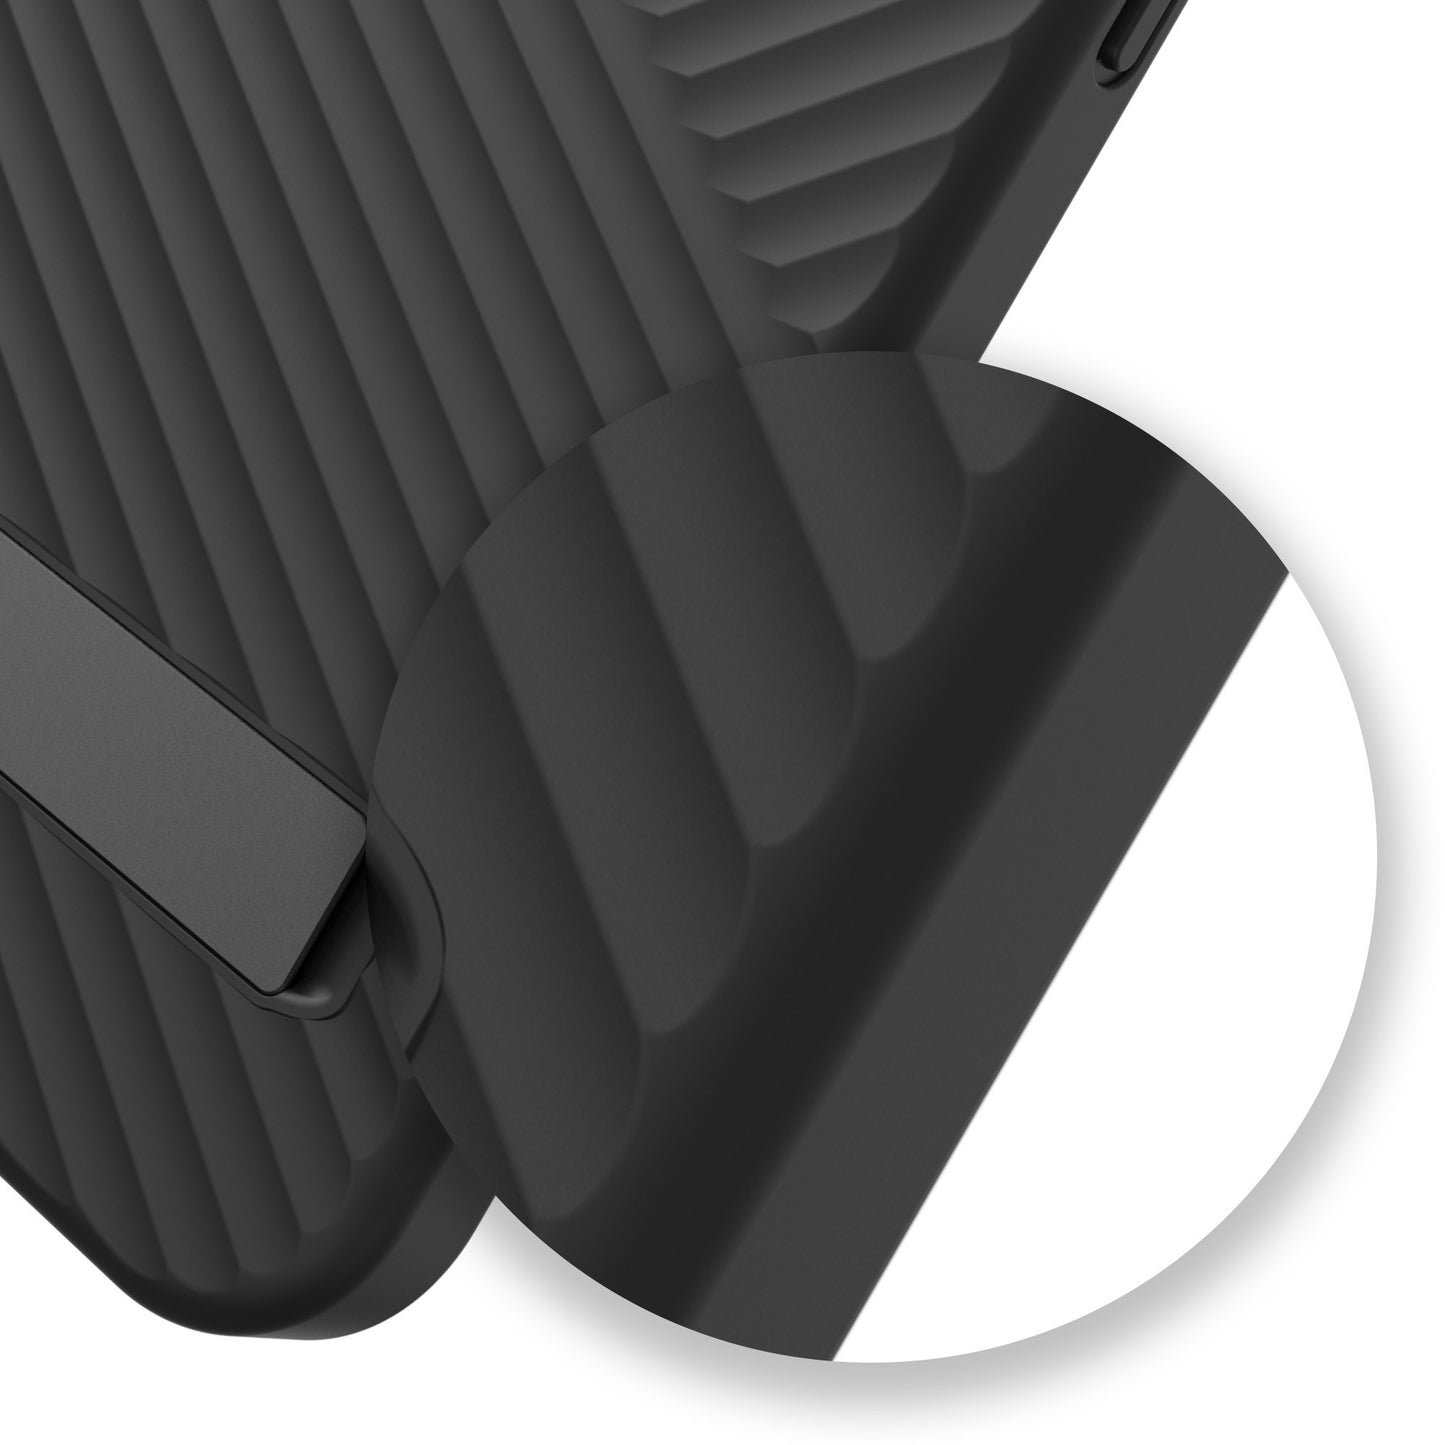 iPhone 15 Pro ZAGG (GEAR4) Denali Snap Kickstand Case - Black - 15-11667